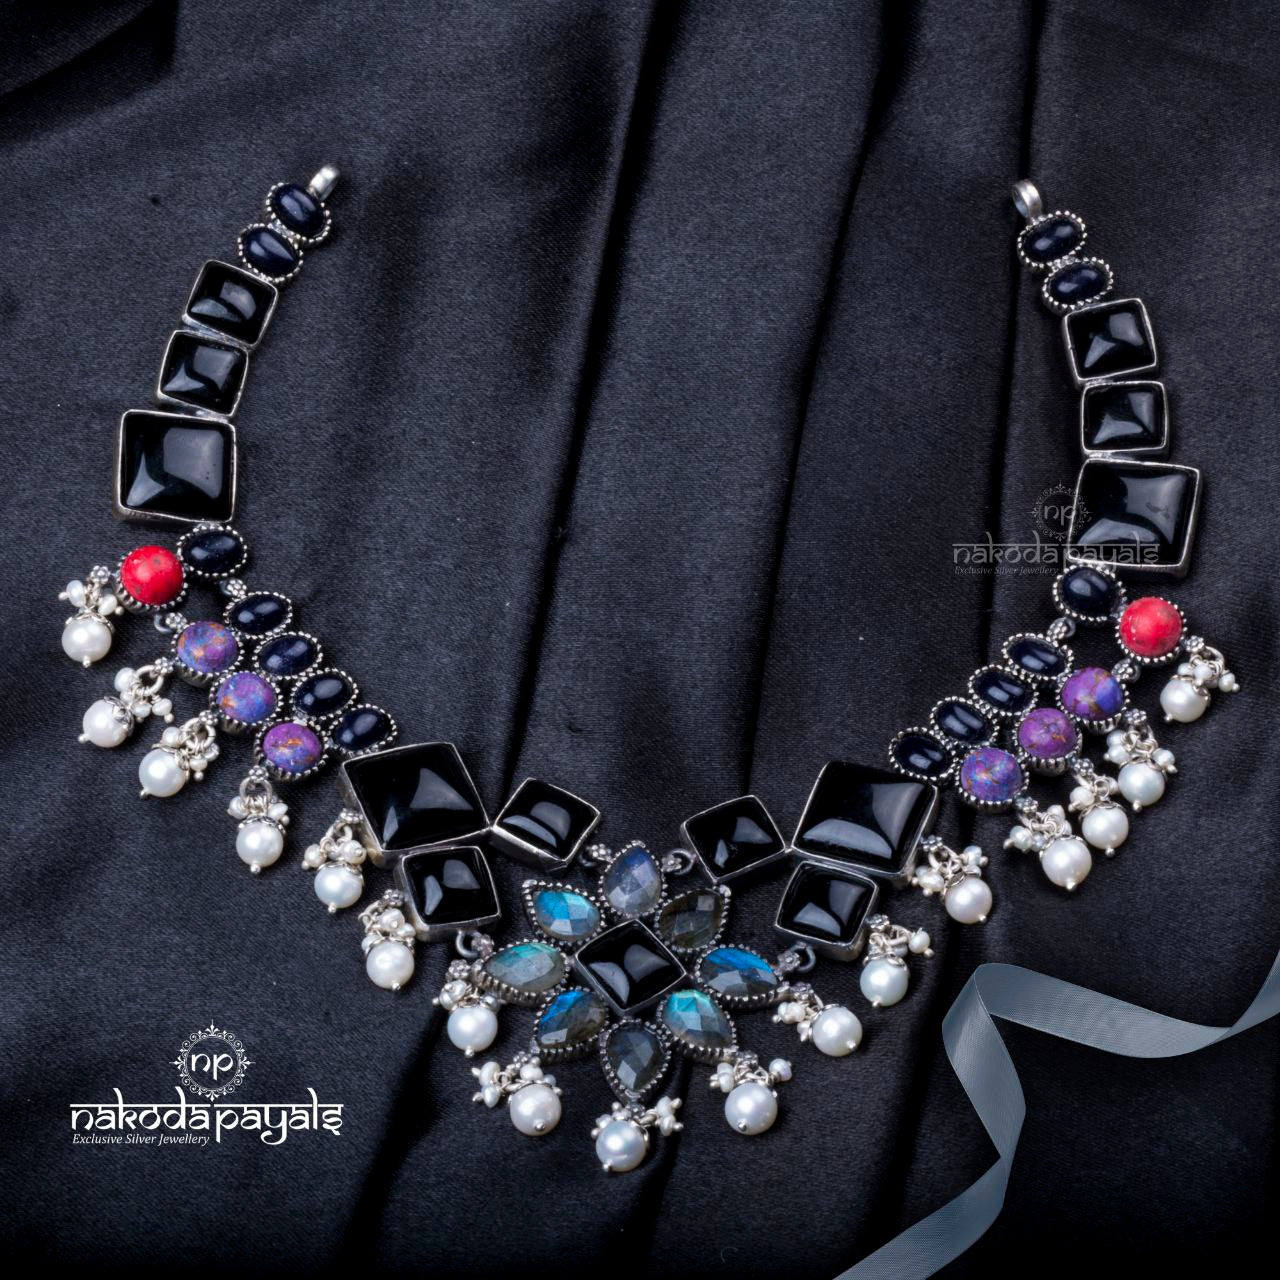 Handmade Luxury Necklace 20